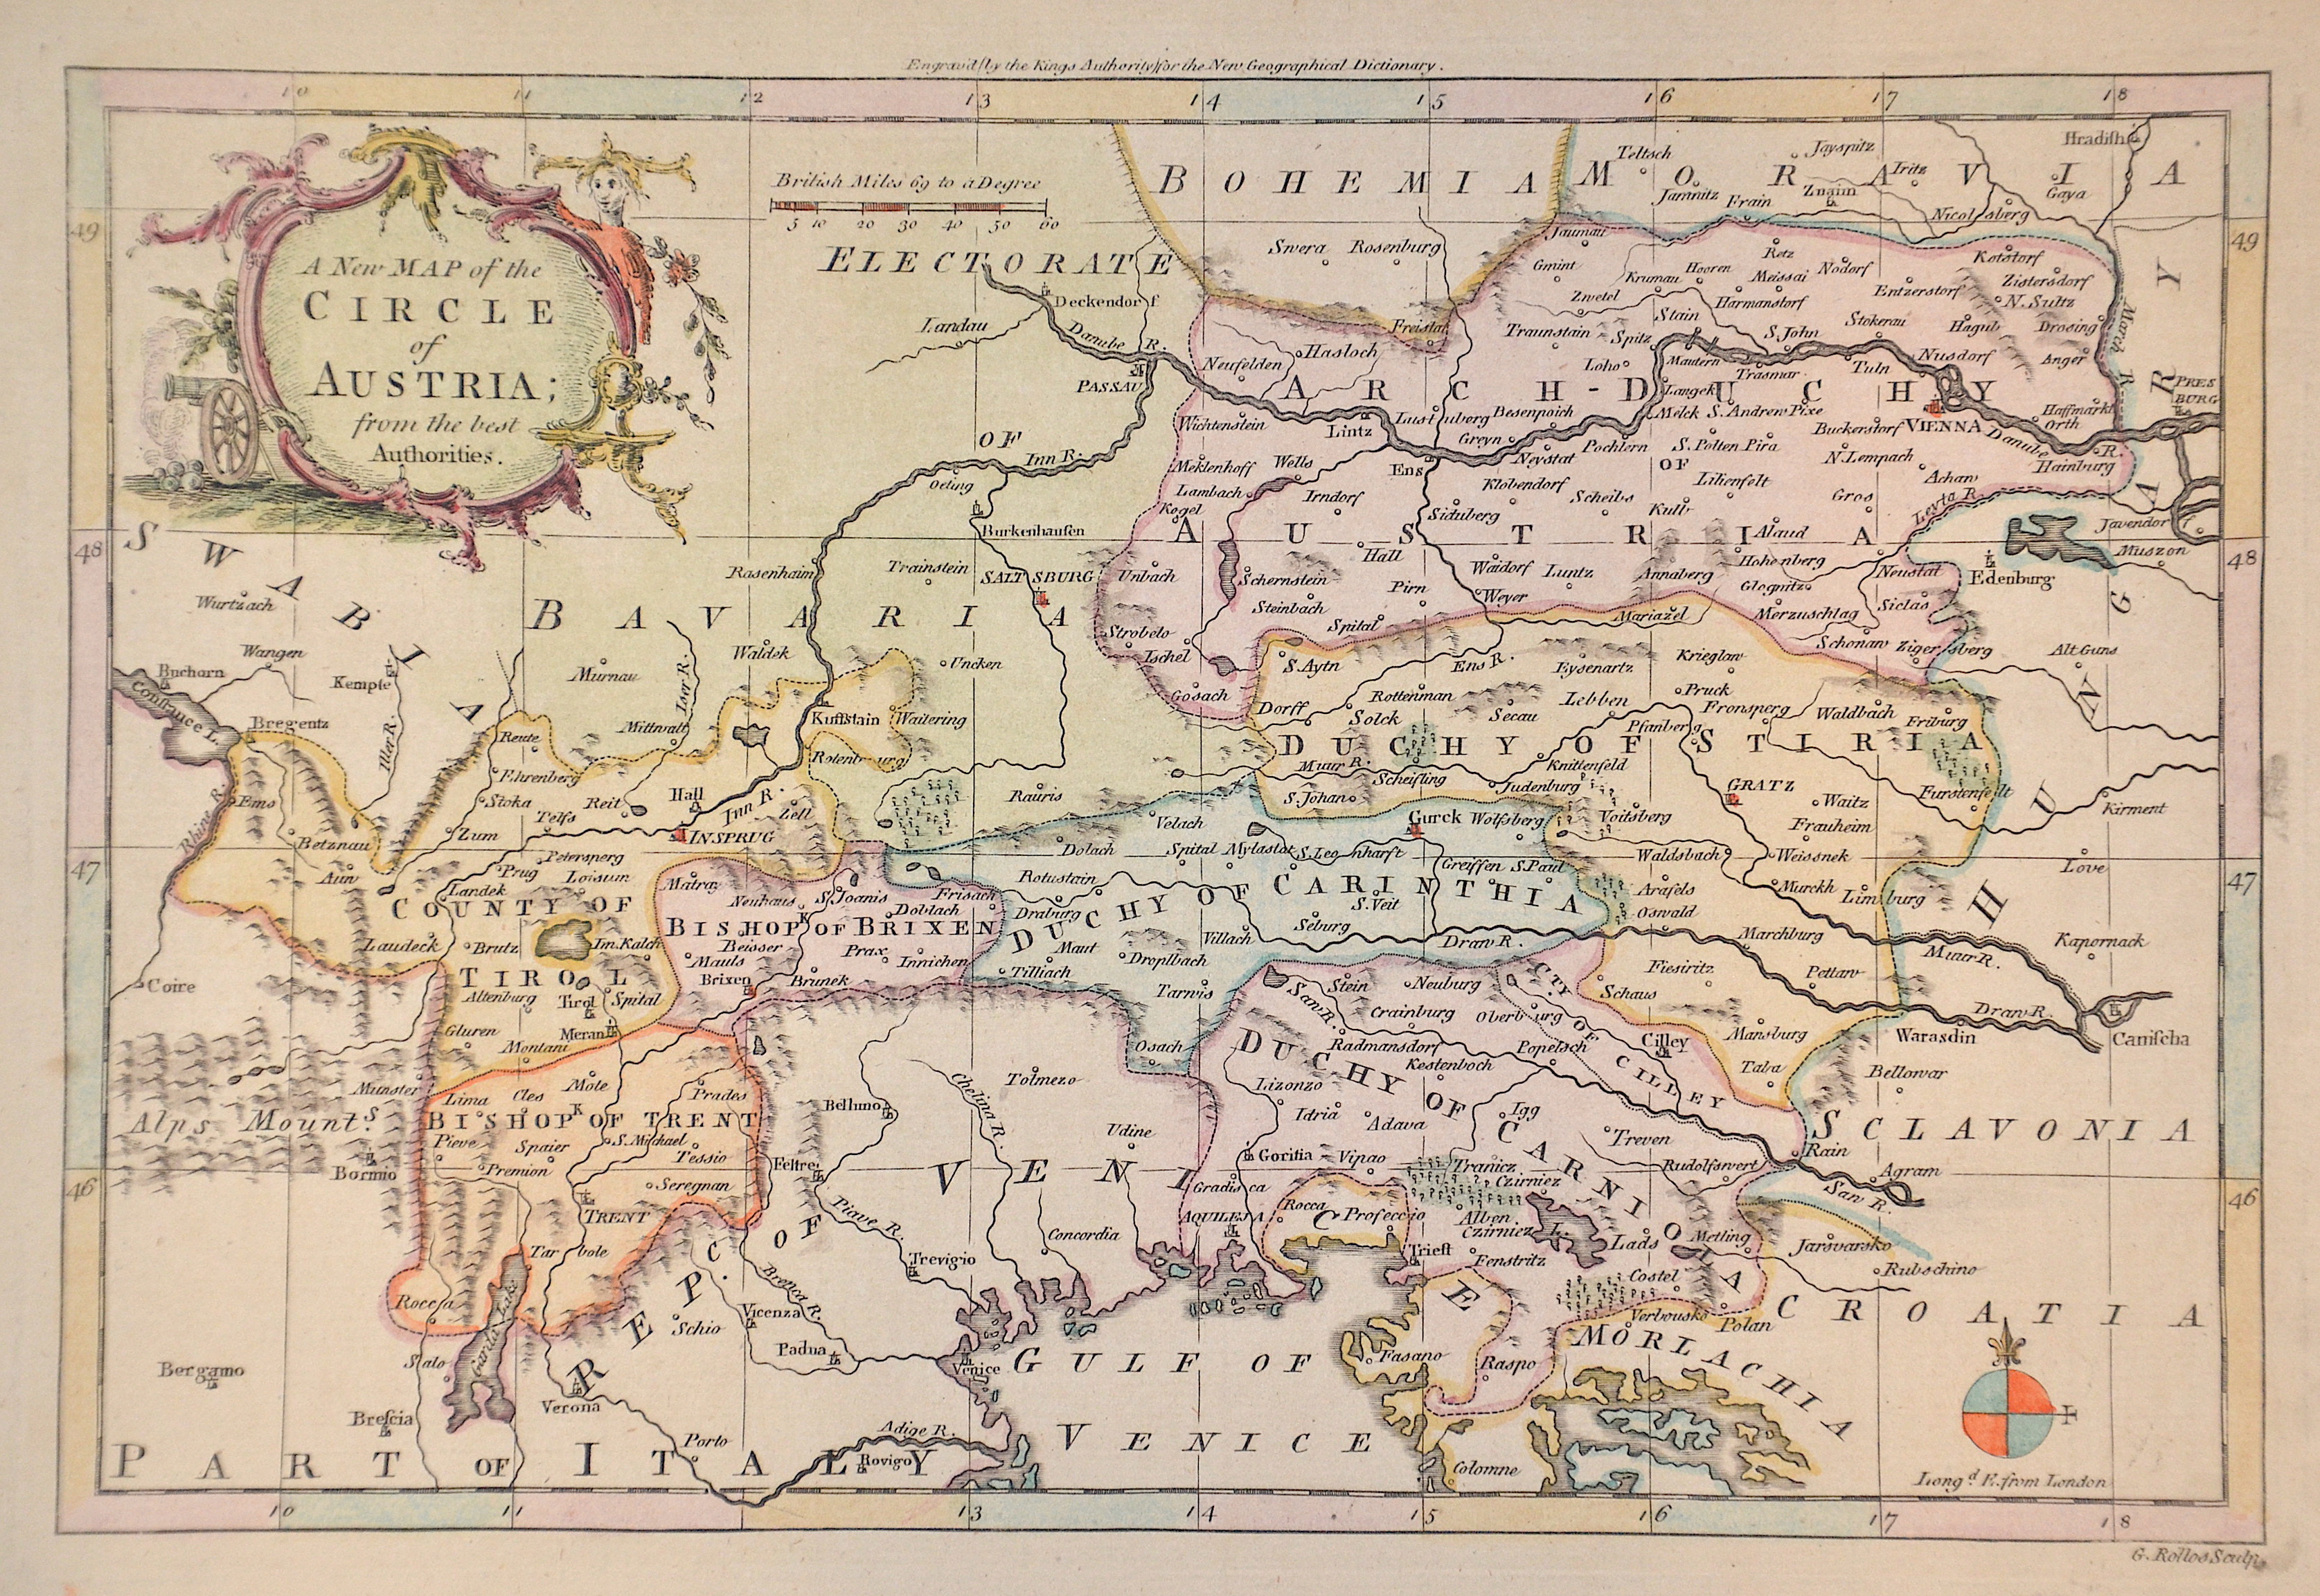 Barrow John, Sir A New Map of the Circle of Austria